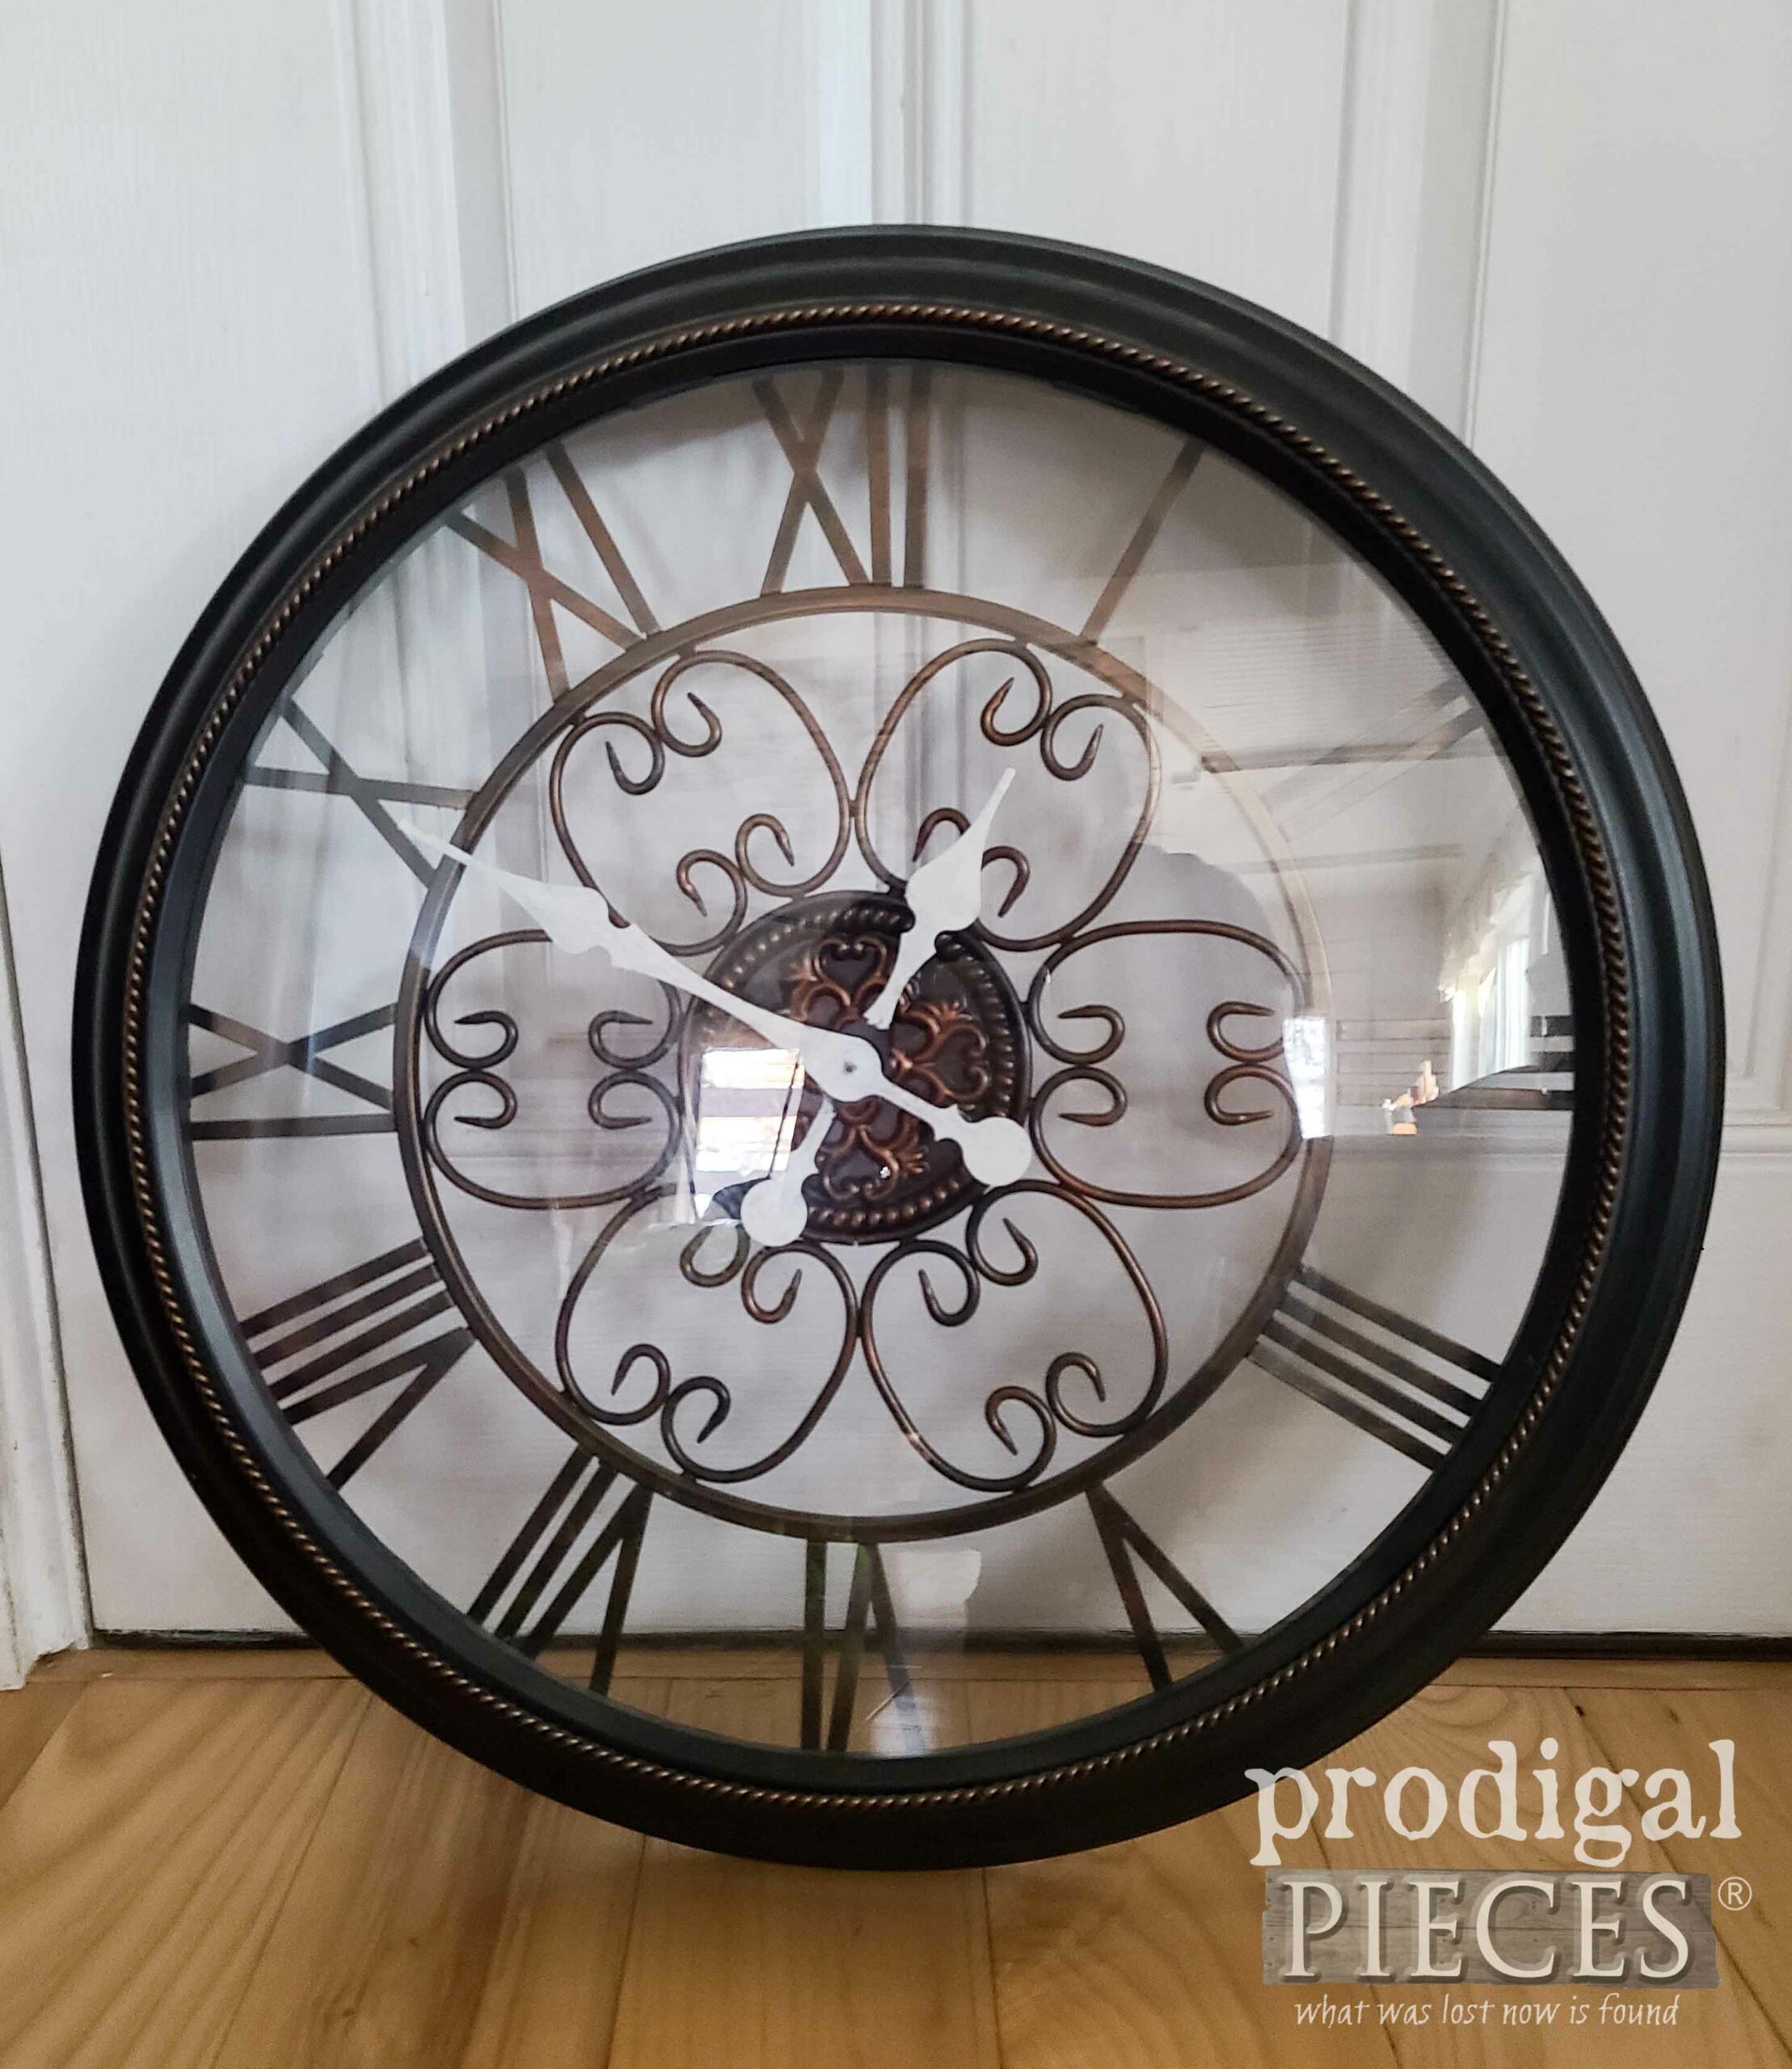 Thrifted Wall Clock Before Makeover | prodigalpieces.com #prodigalpieces